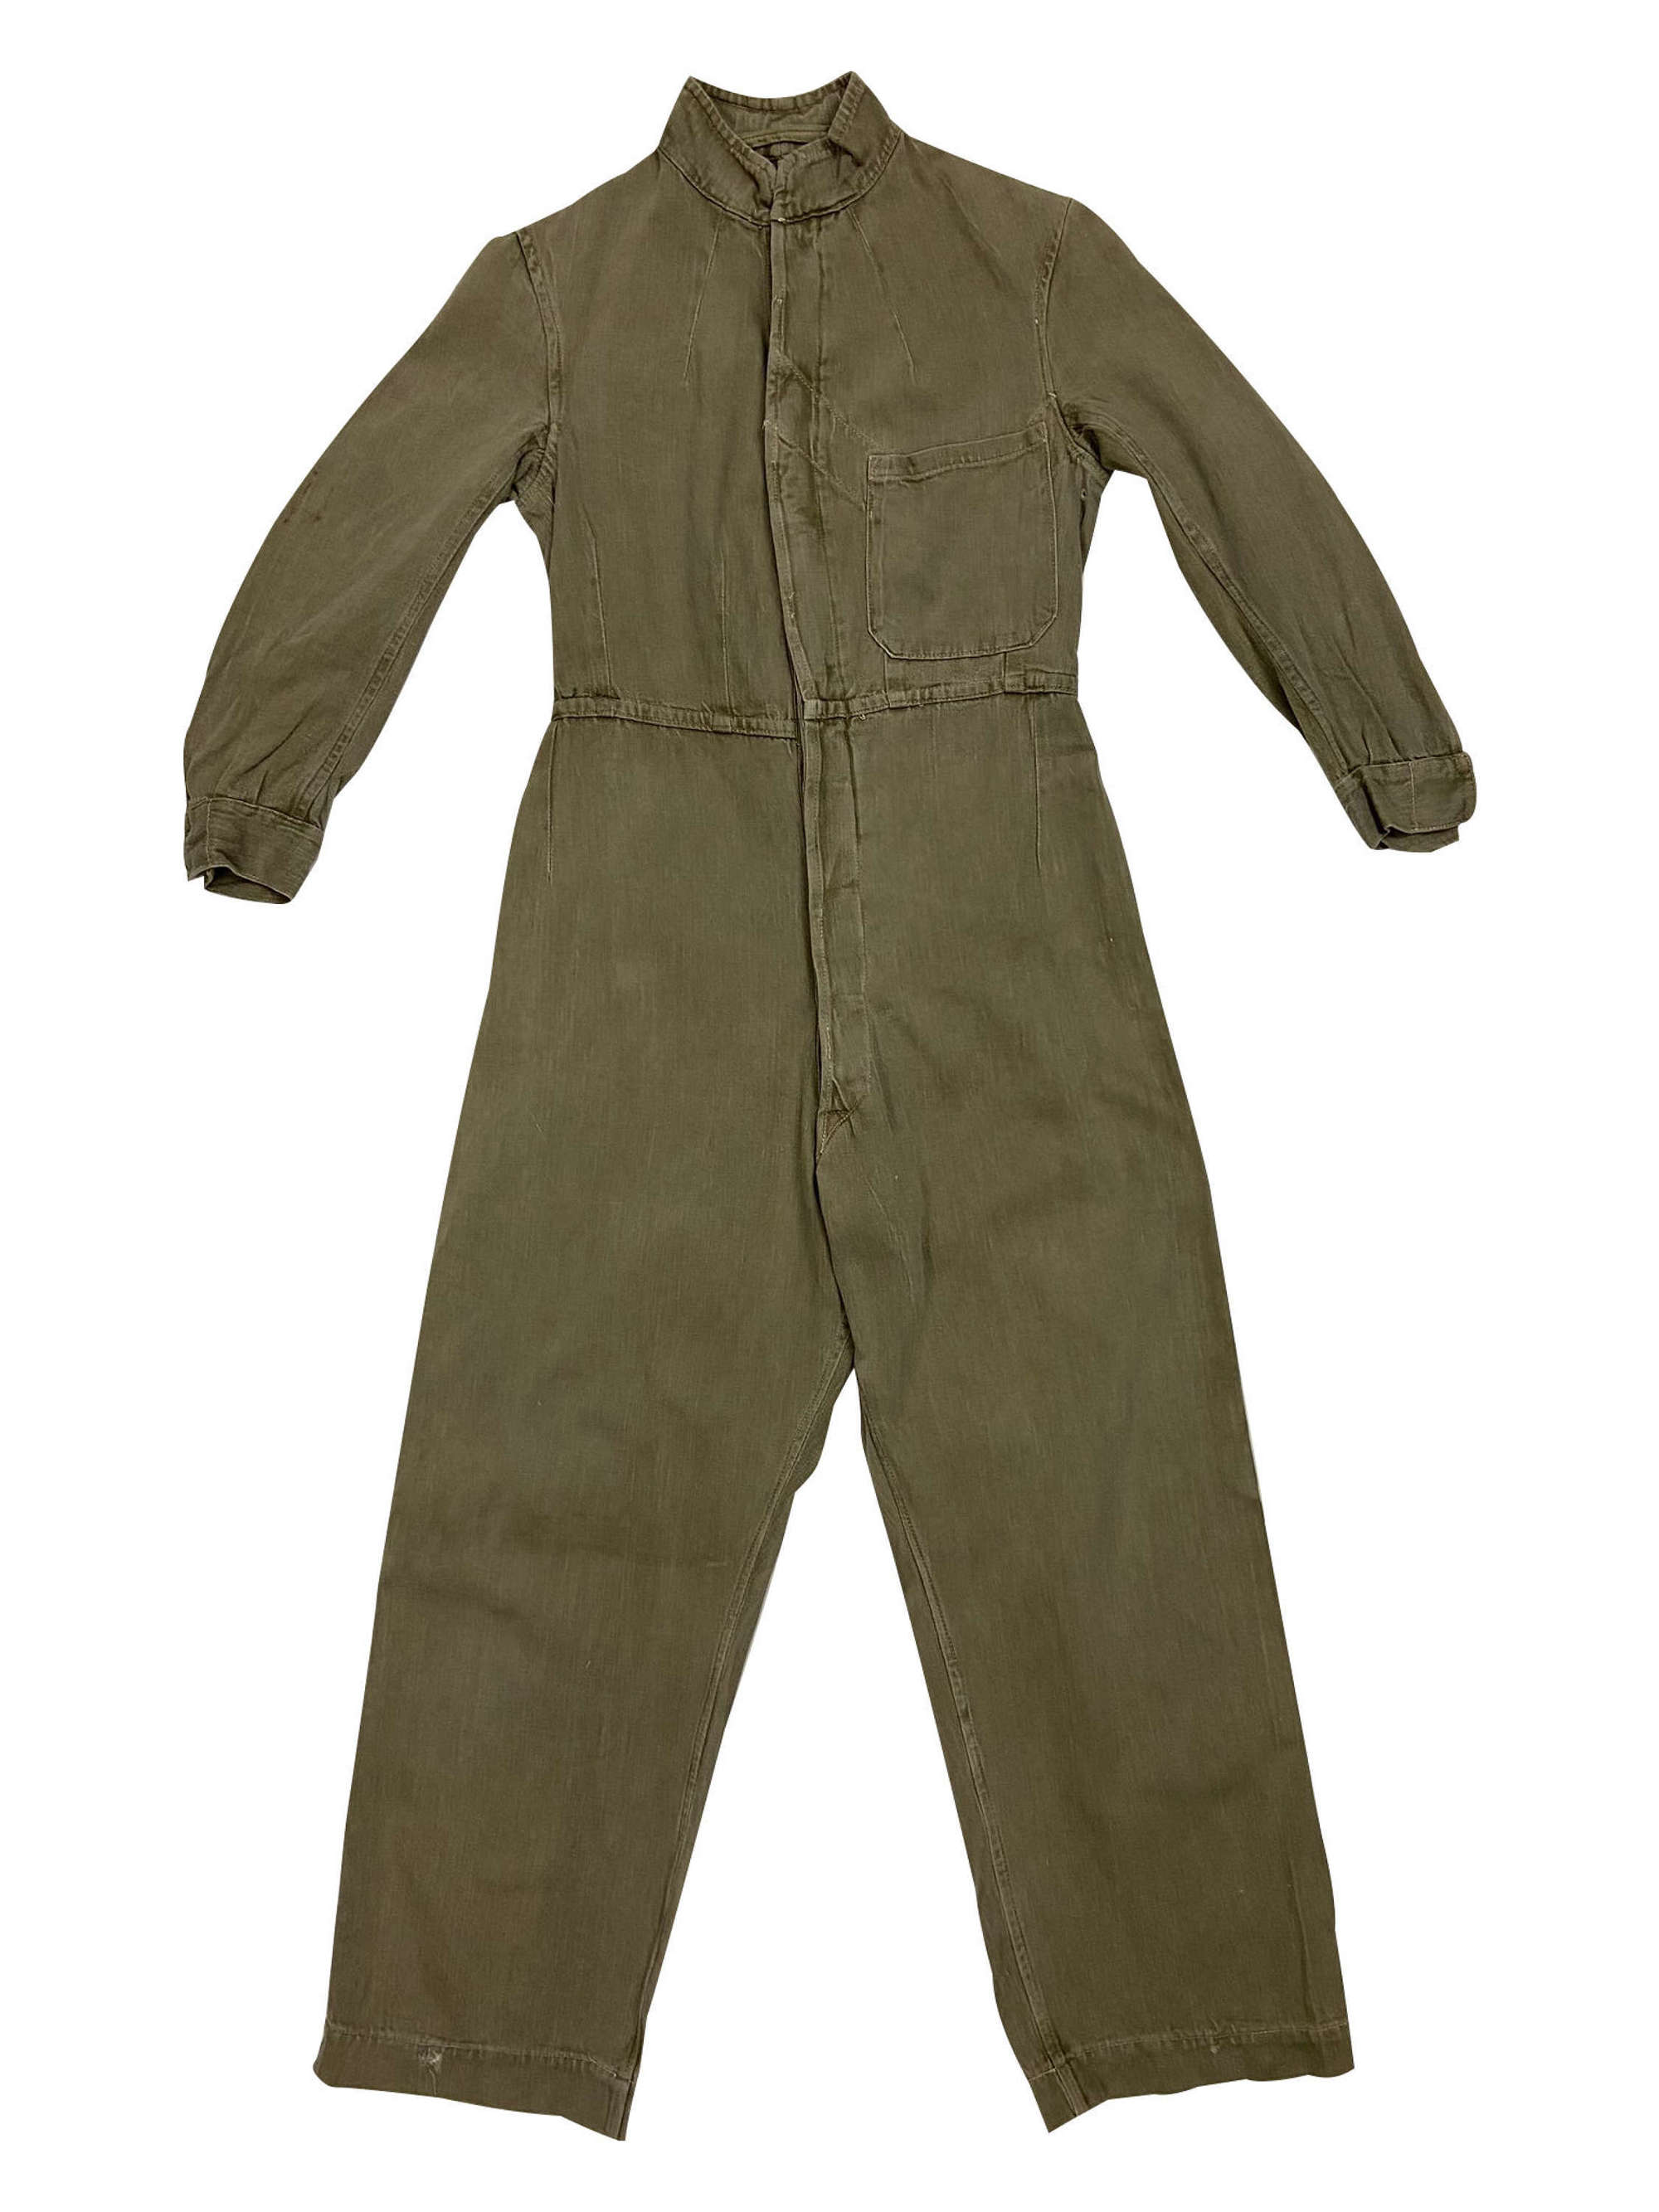 Original WW2 ATS Combination Suit Overalls